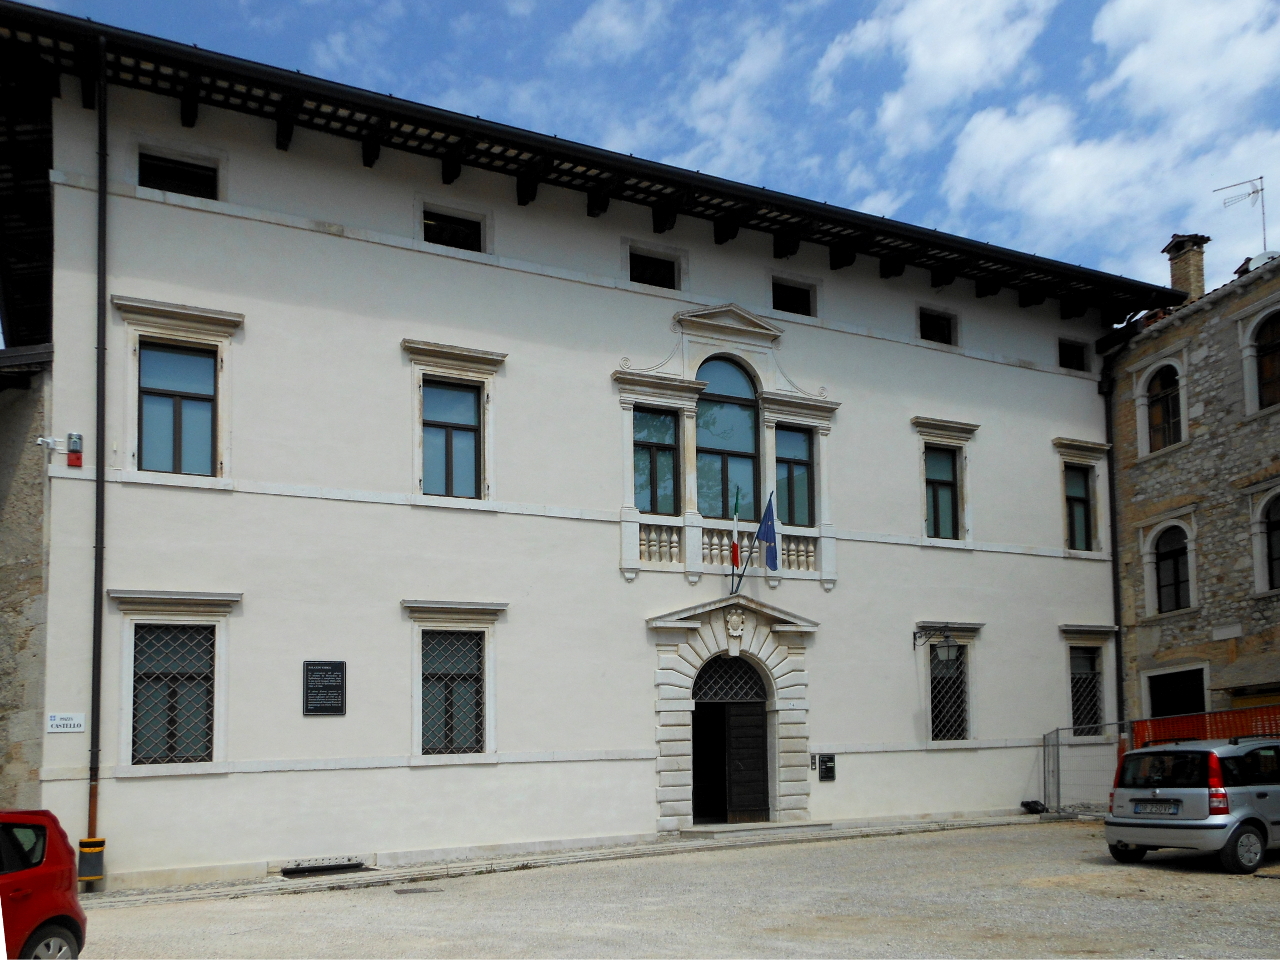 Castello di Spilimbergo, Palazzo Tadea (castello, medievale) - Spilimbergo (PN) 